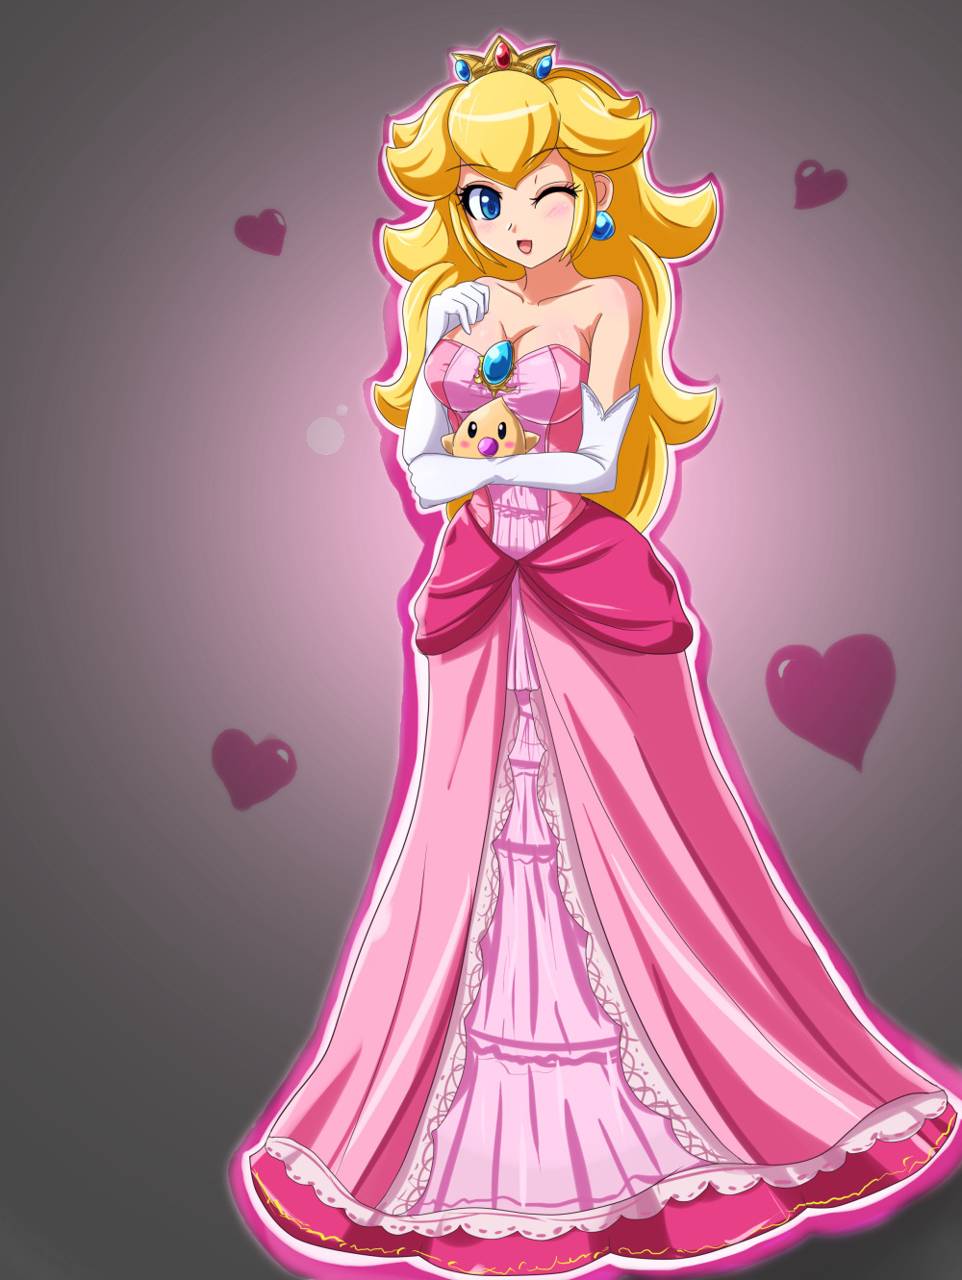 Princess Peach Wallpapers - Top Free Princess Peach Backgrounds ...